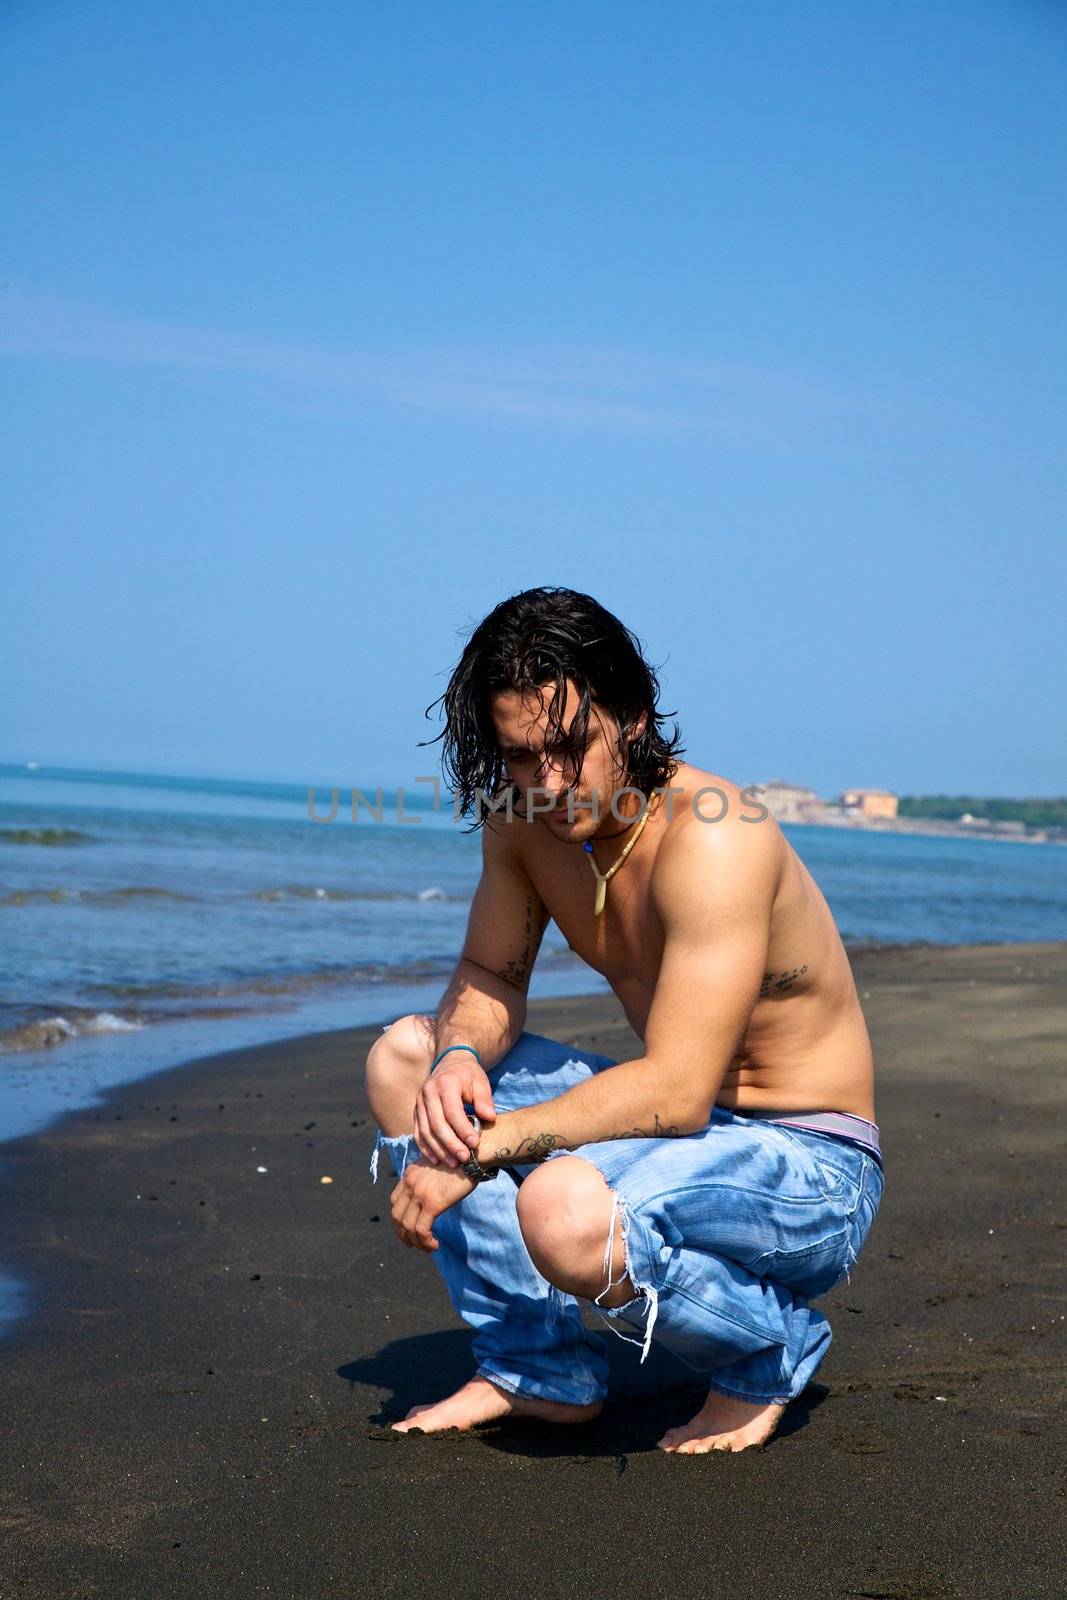 Man on the beach thinking by fmarsicano